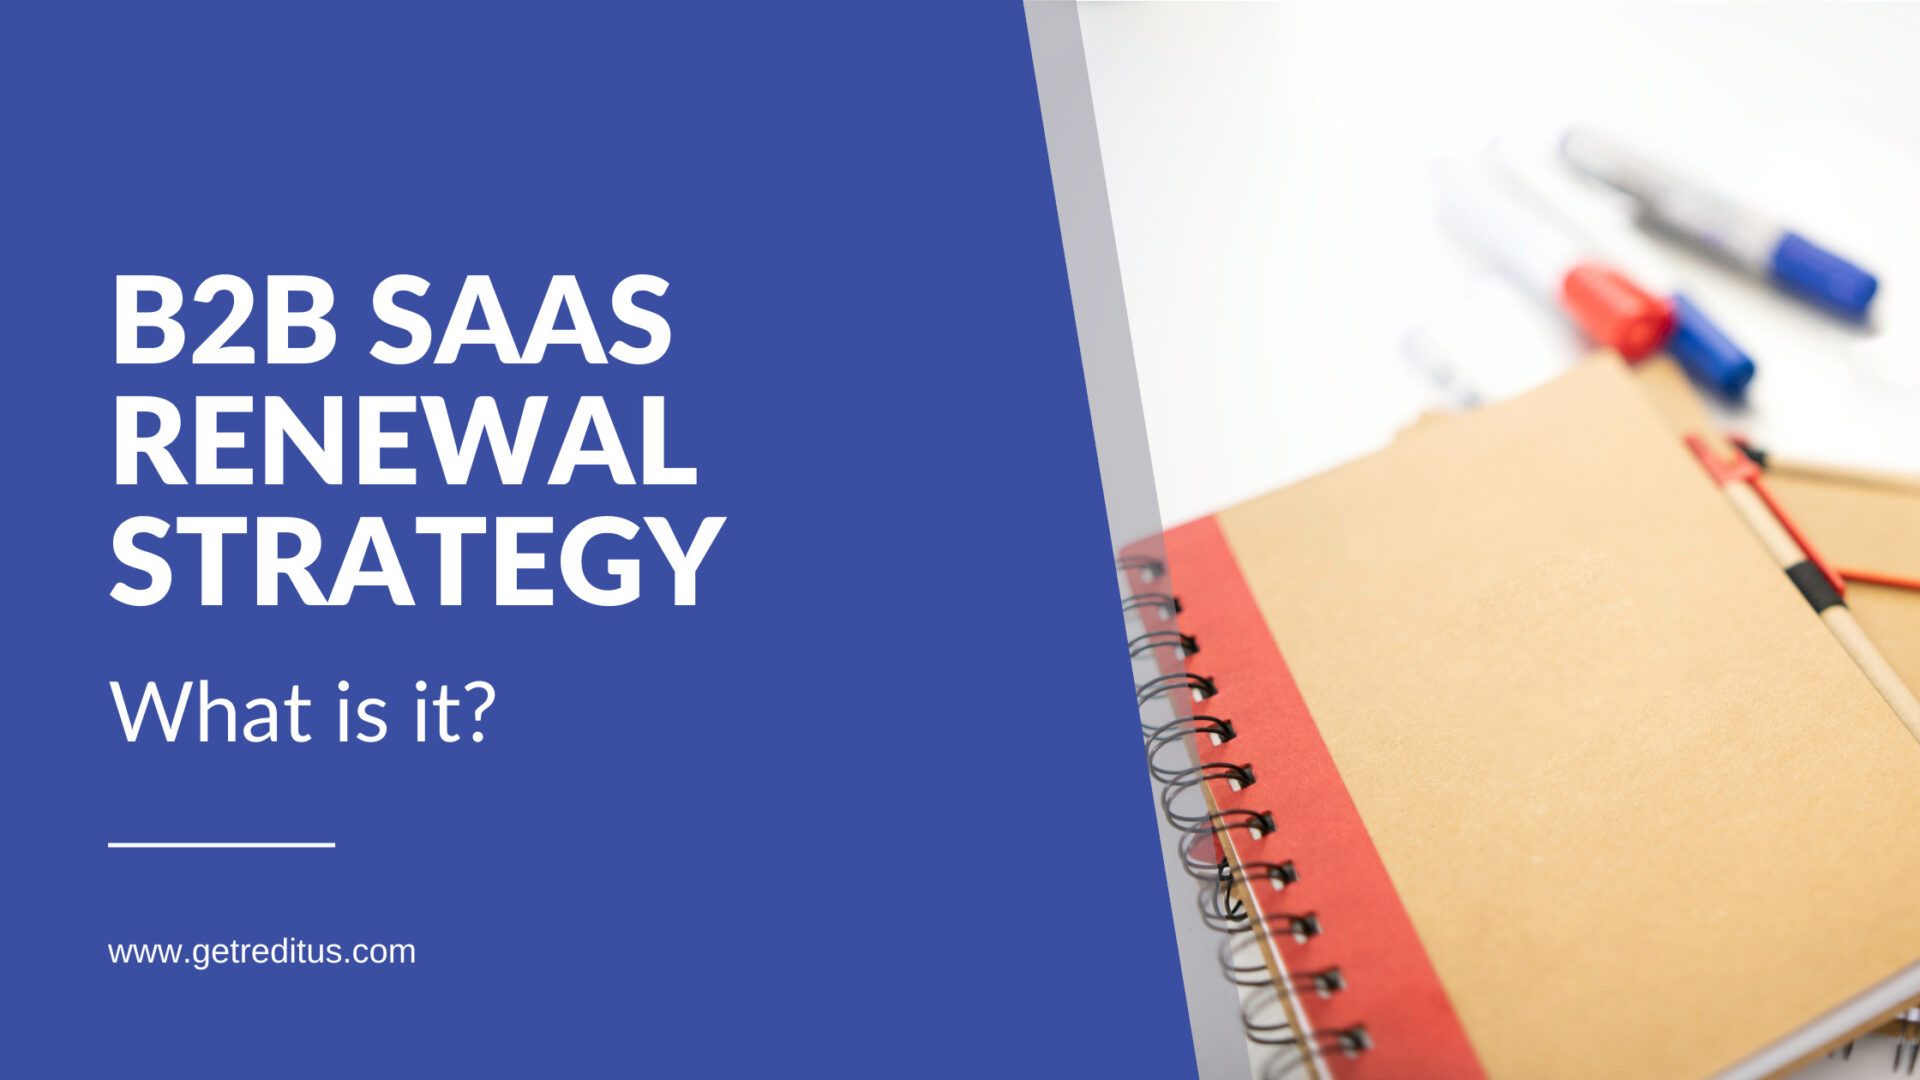 What is a B2B SaaS Renewal Strategy?